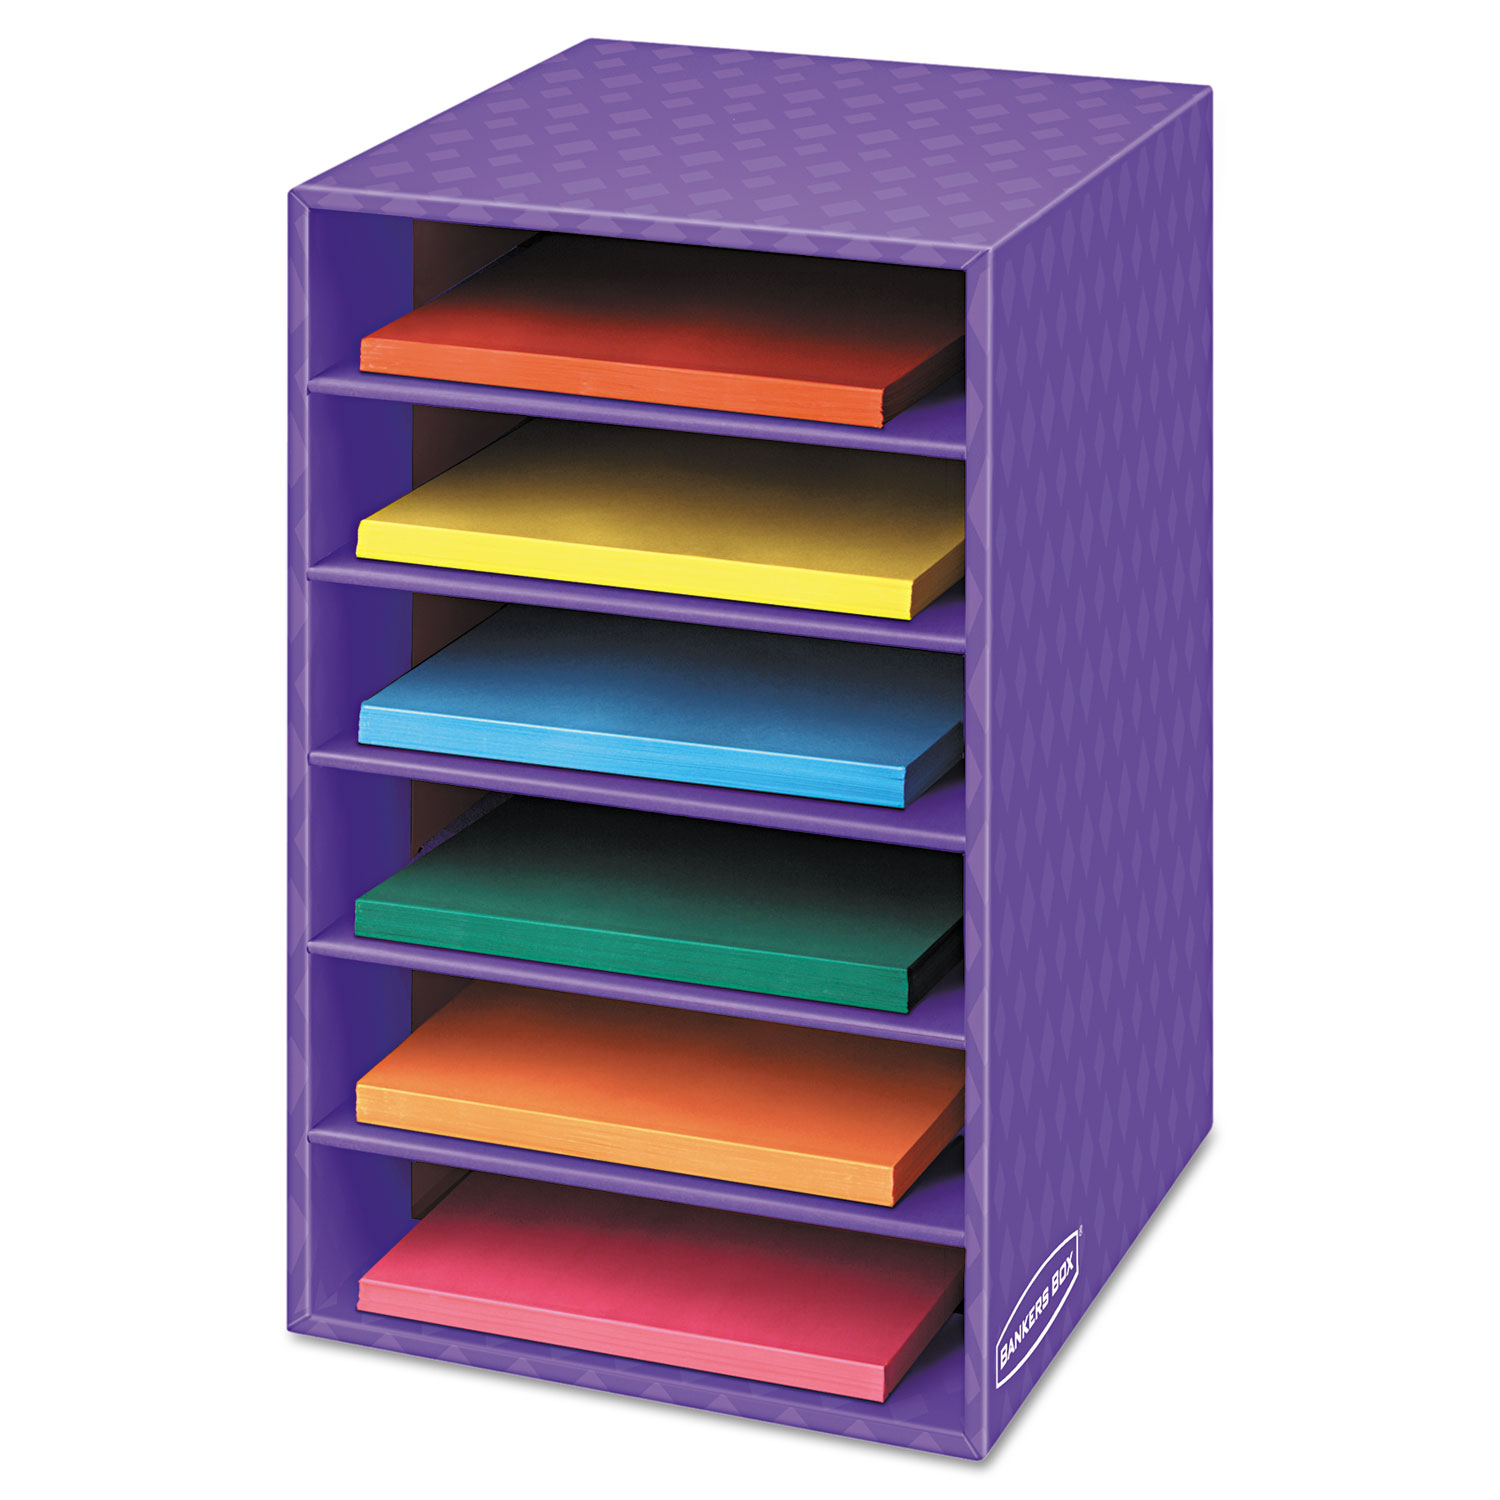  Fellowes 3381201 Vertical Classroom Organizer, 6 shelves, 11 7/8 x 13 1/4 x 18, Purple (FEL3381201) 